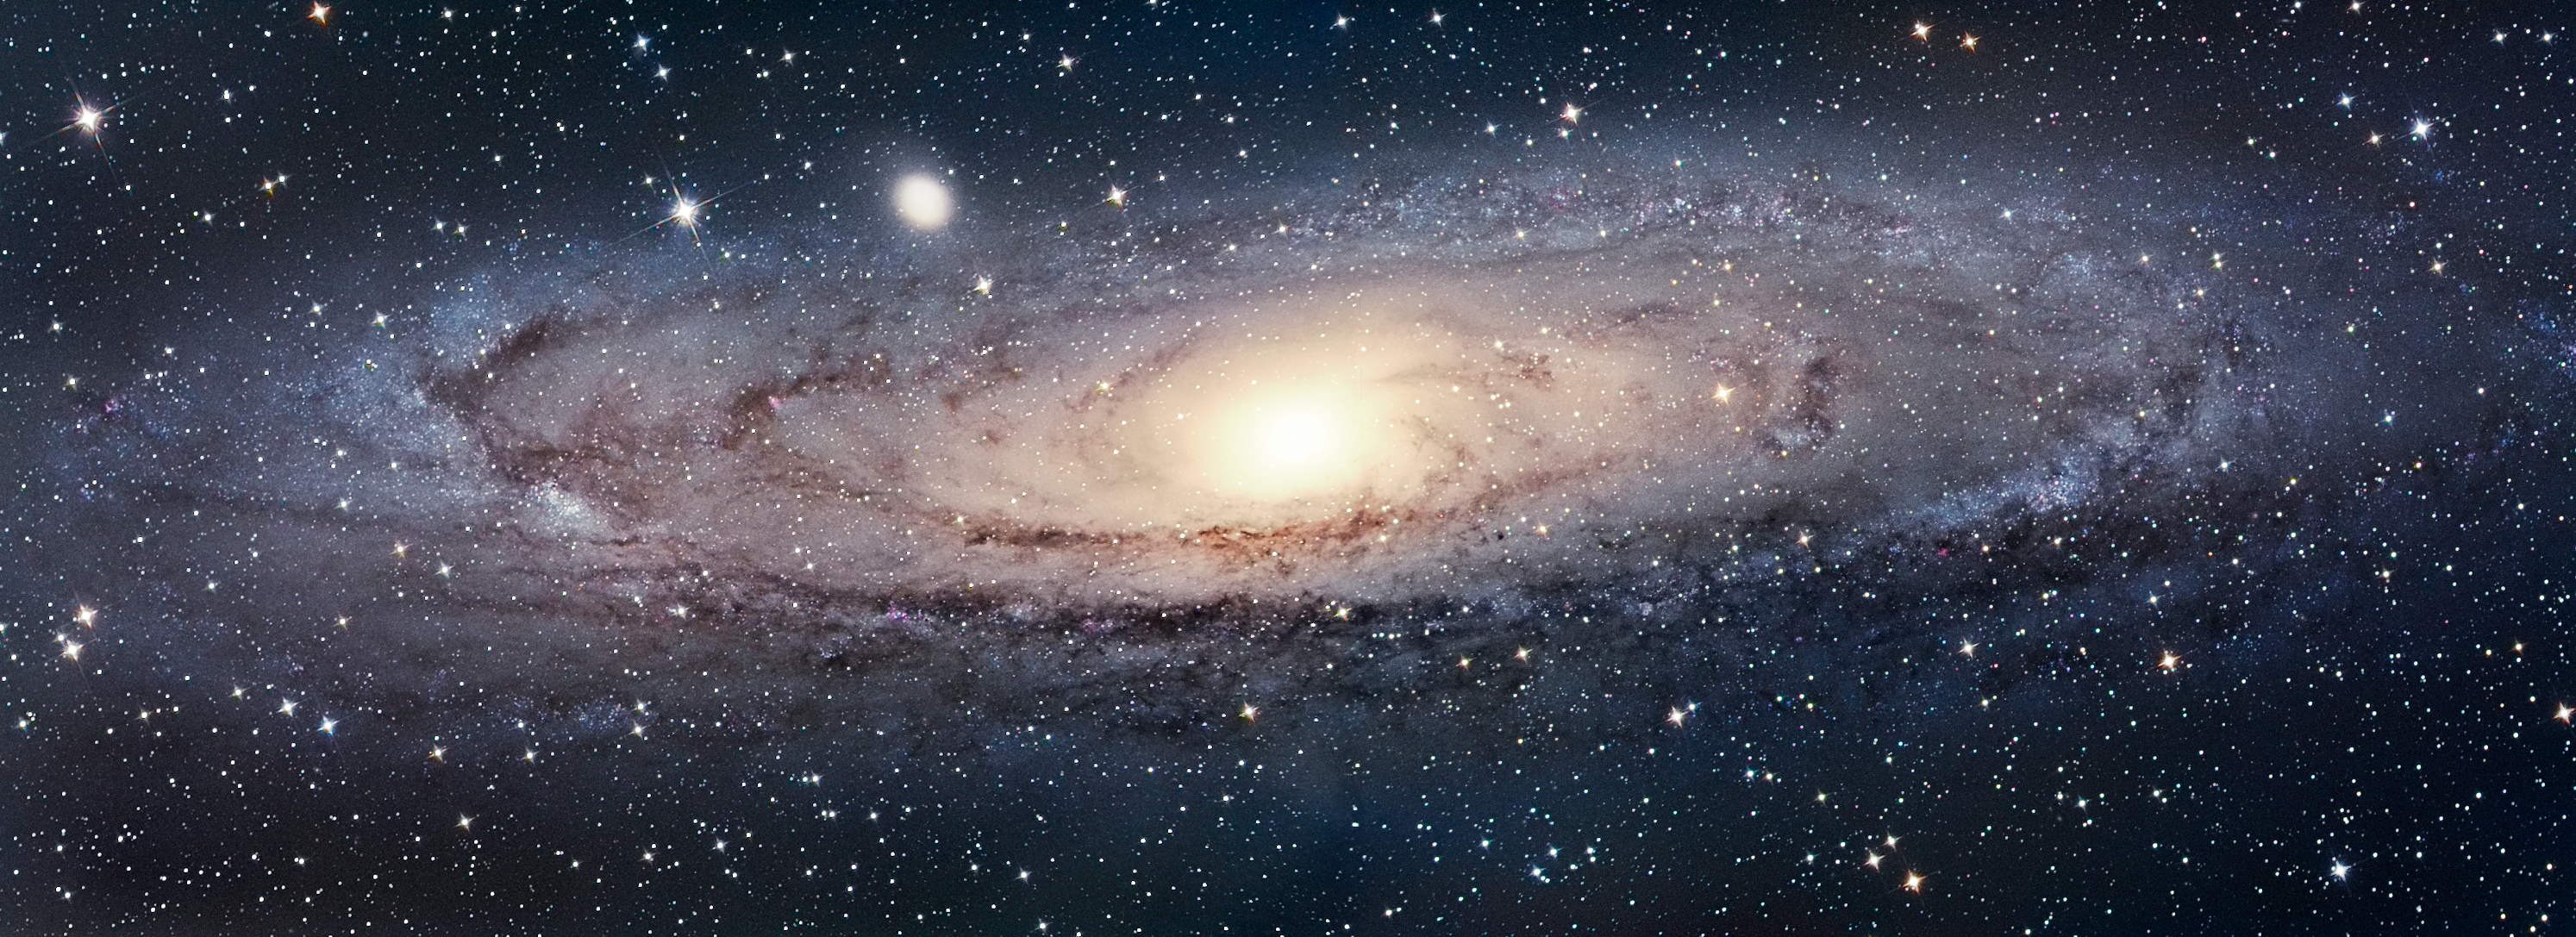 General 2988x1087 Andromeda spiral galaxy galaxy Messier 31 space art digital art